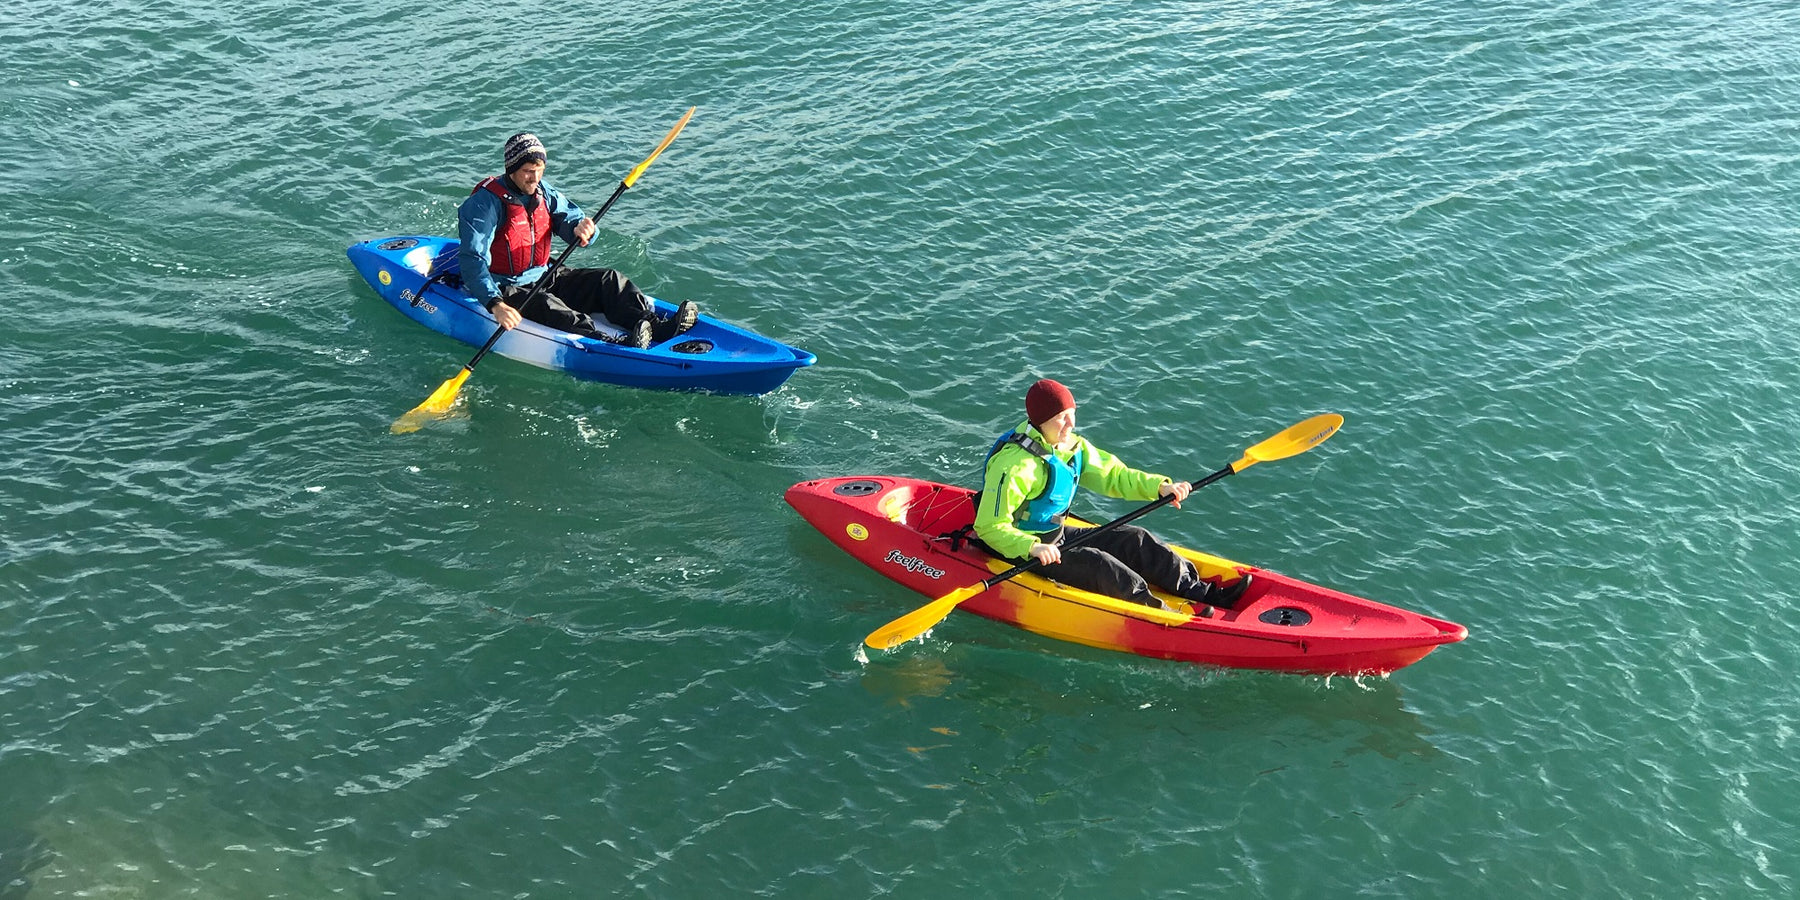 The feelfree Kayak Experience UK